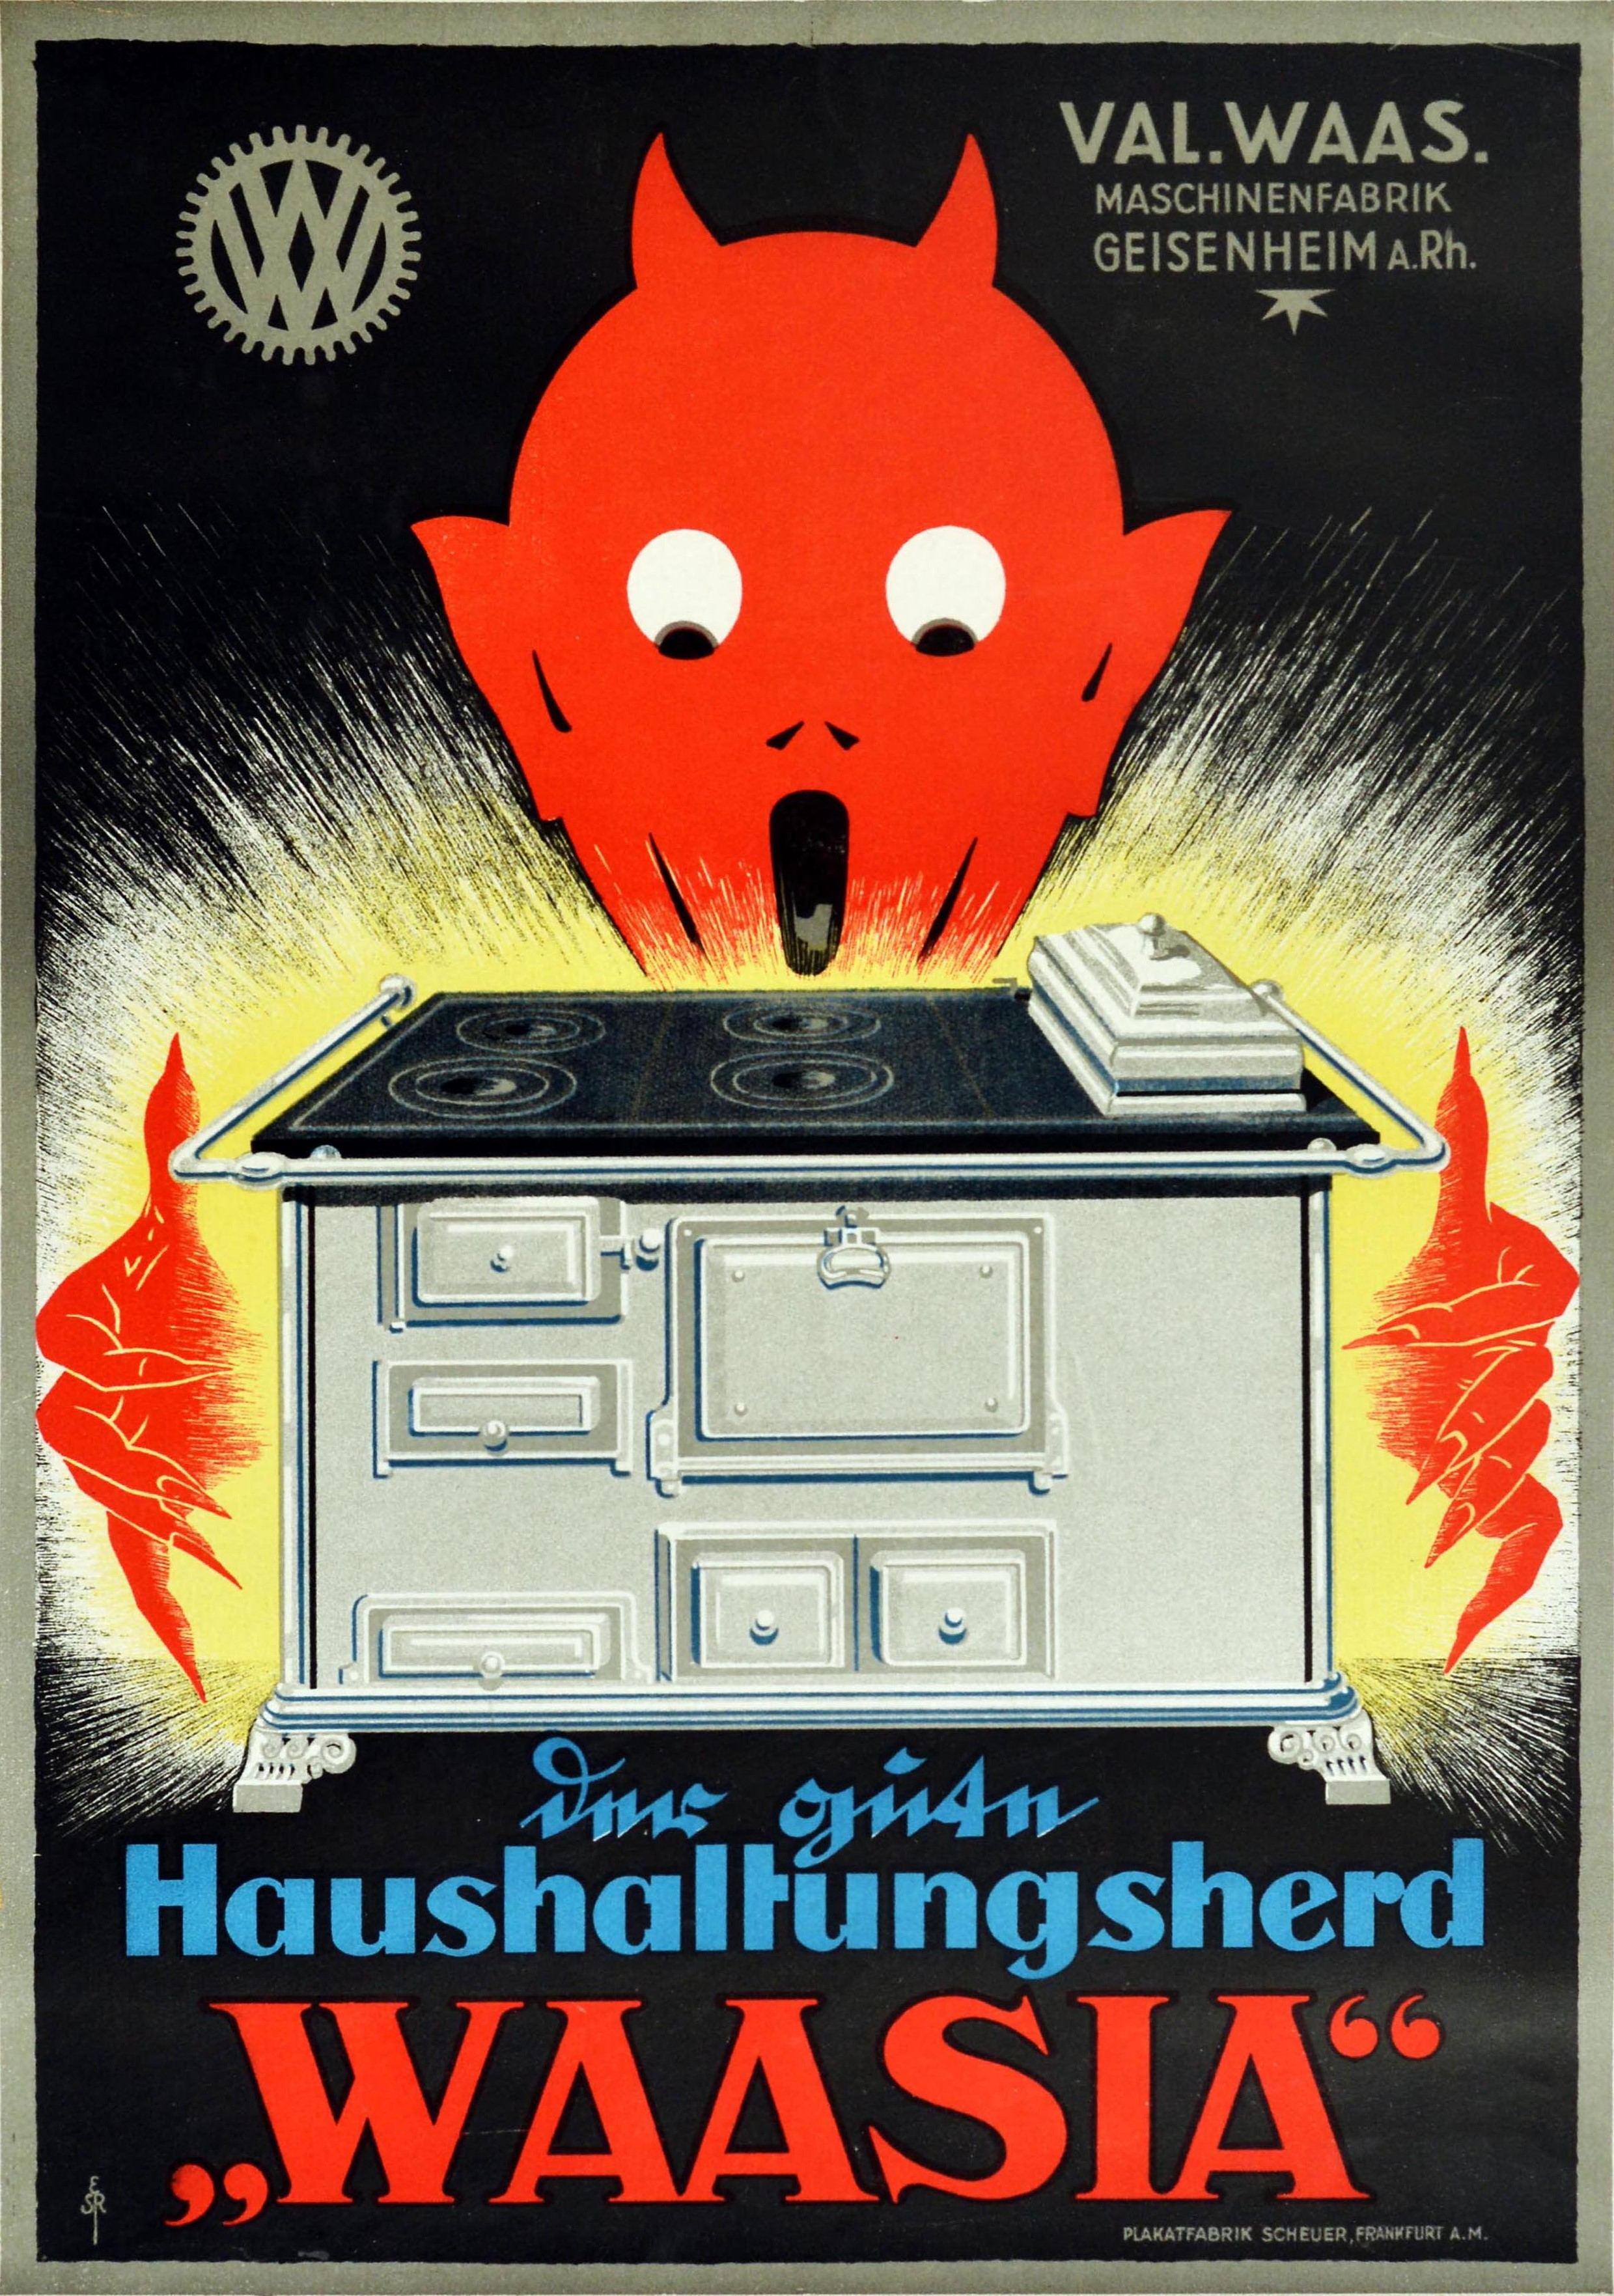 Unknown Print - Original Vintage Poster For Waasia Household Stoves Kitchen Cooker Devil Design